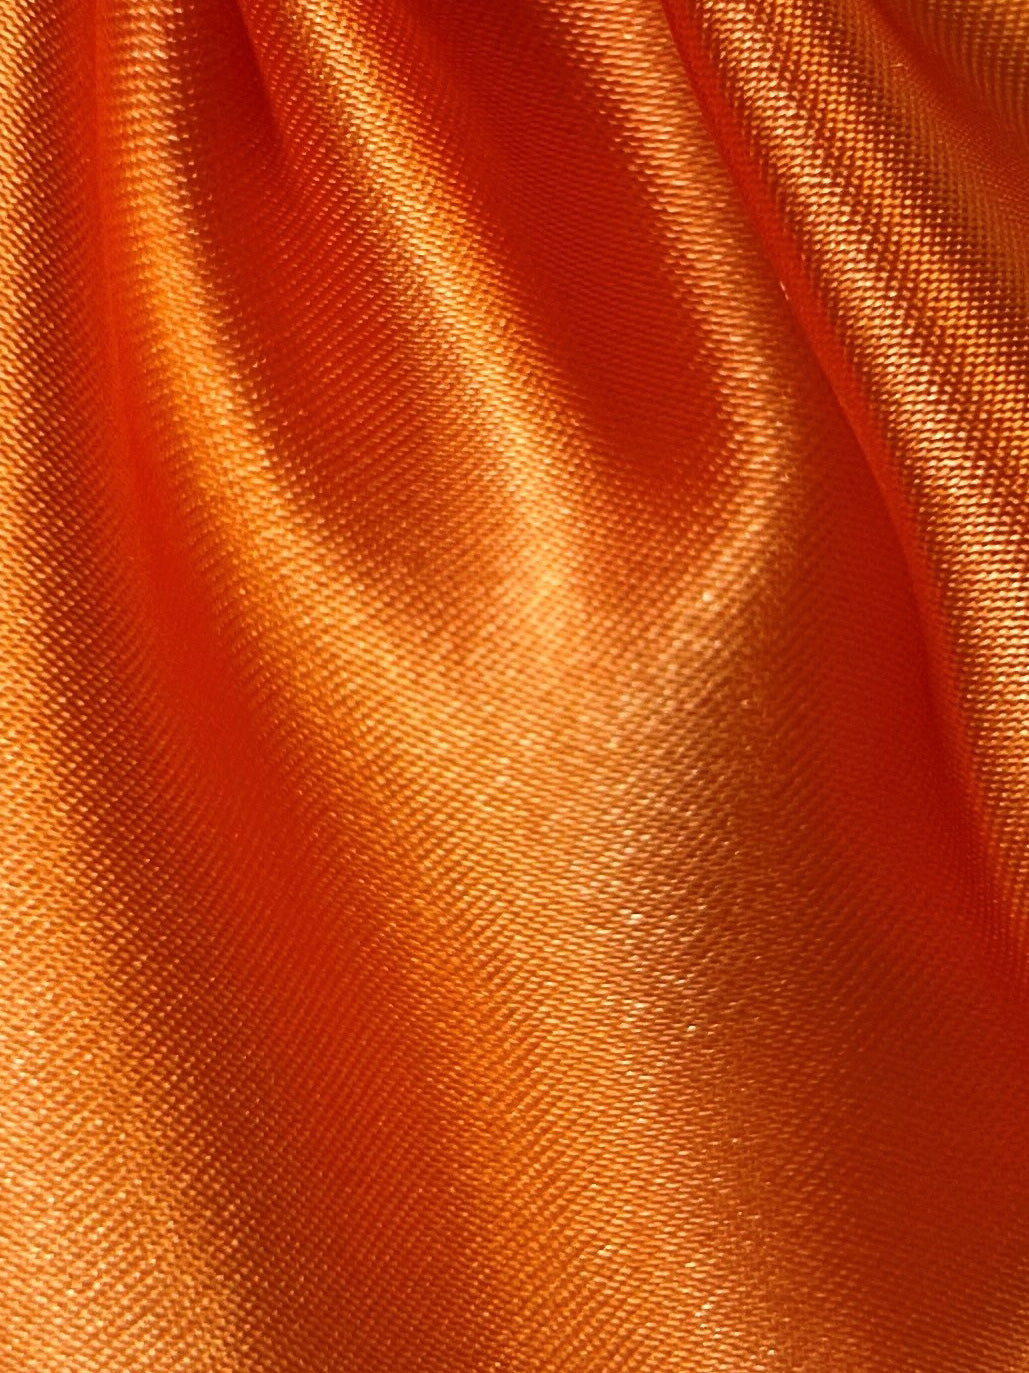 Satin Polyester Orange - Ascot